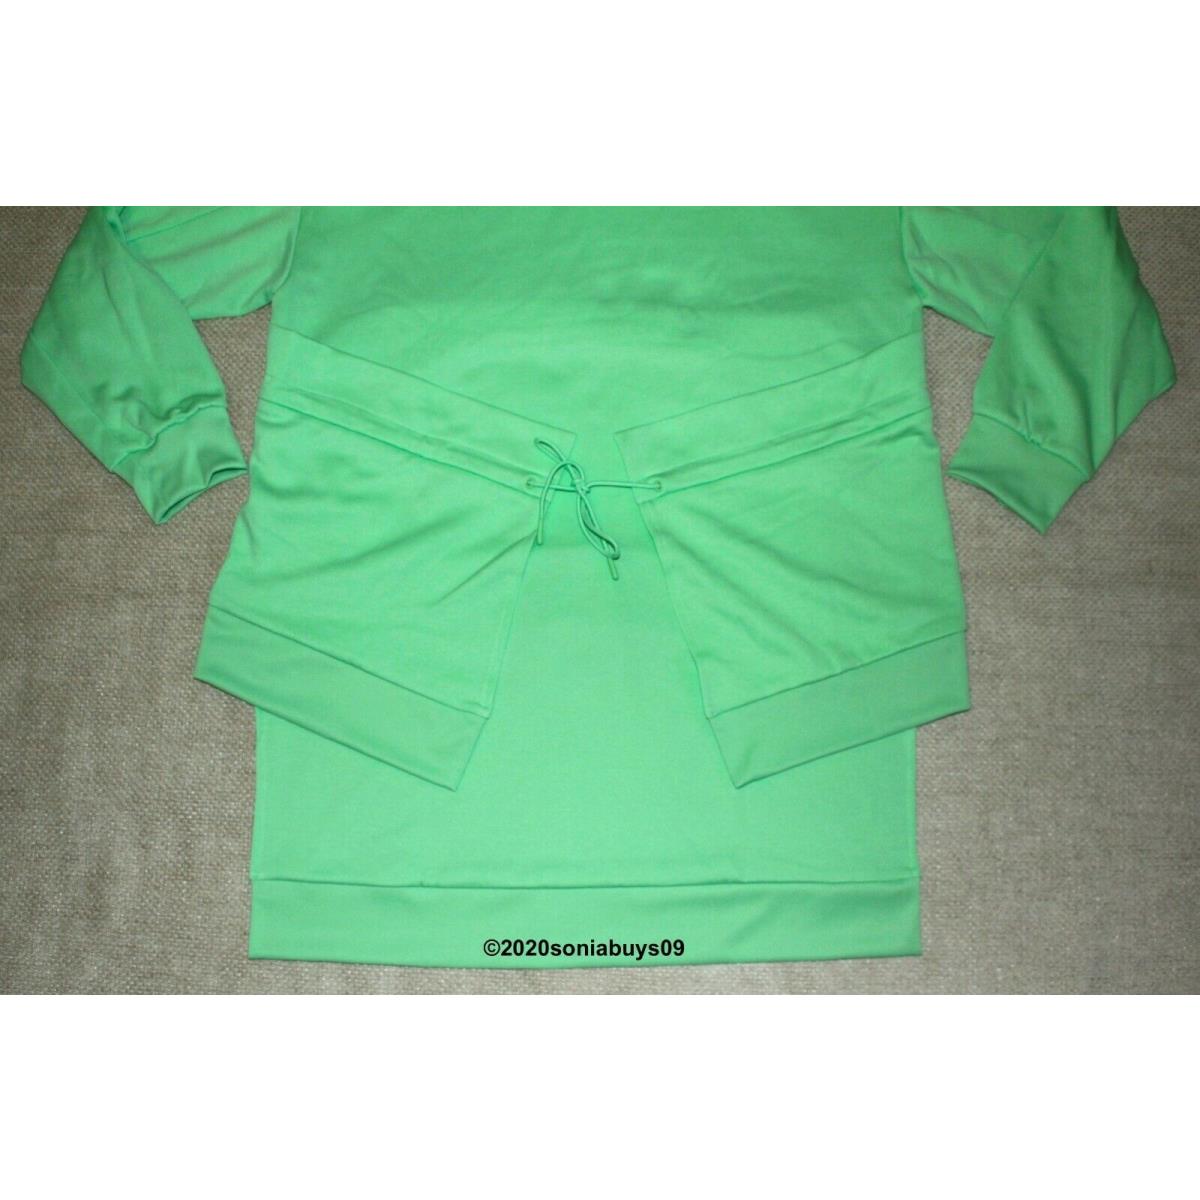 Adidas clothing  - Glow Mint Green 4